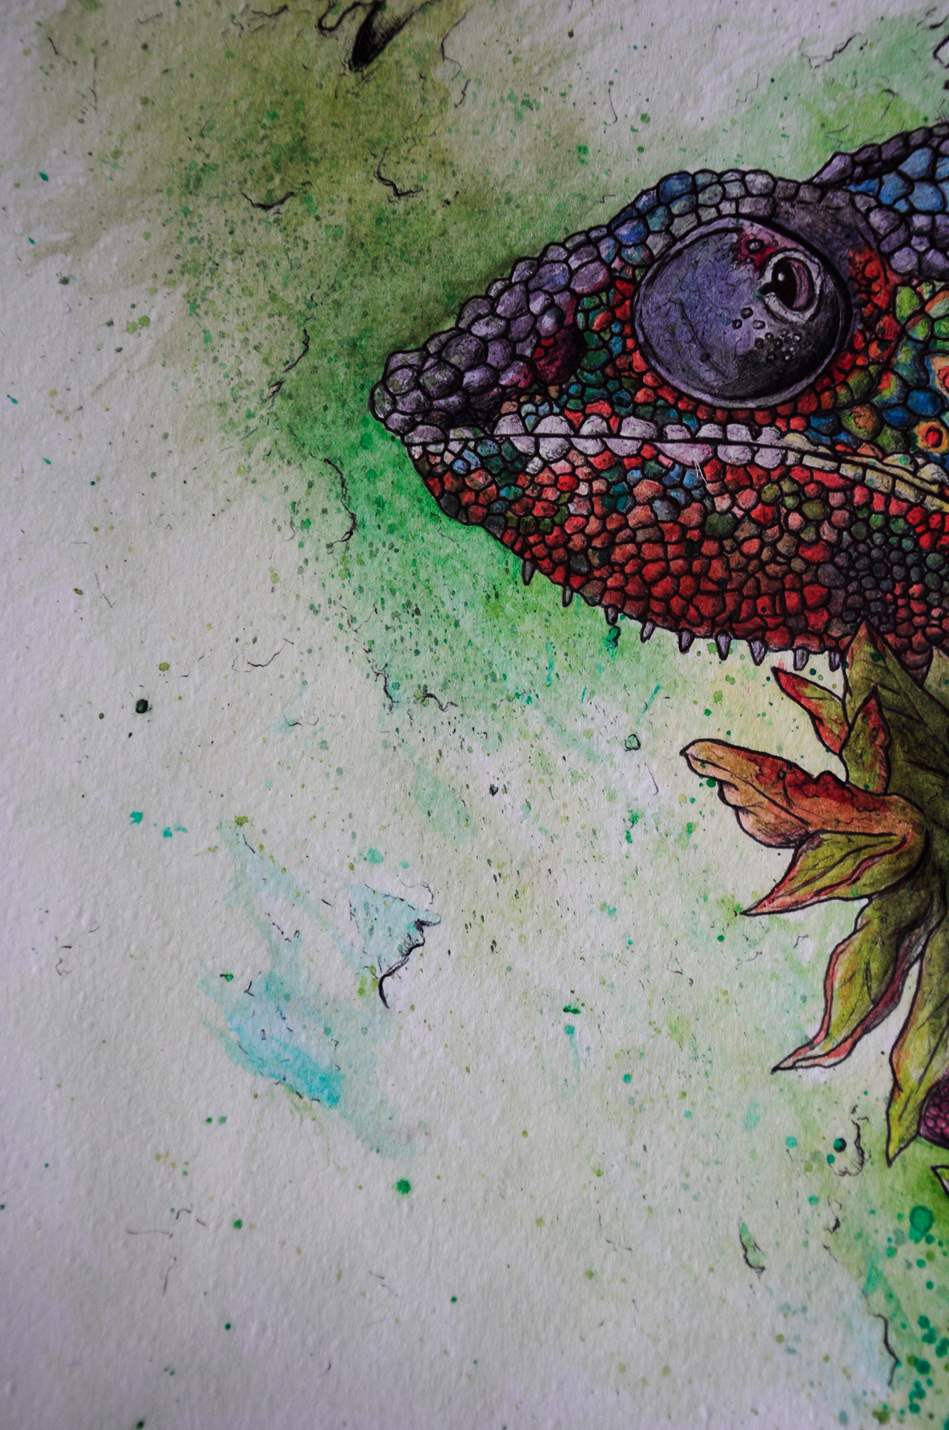 chameleon lizard animal water color watercolor watercolour bright detail biro splashes